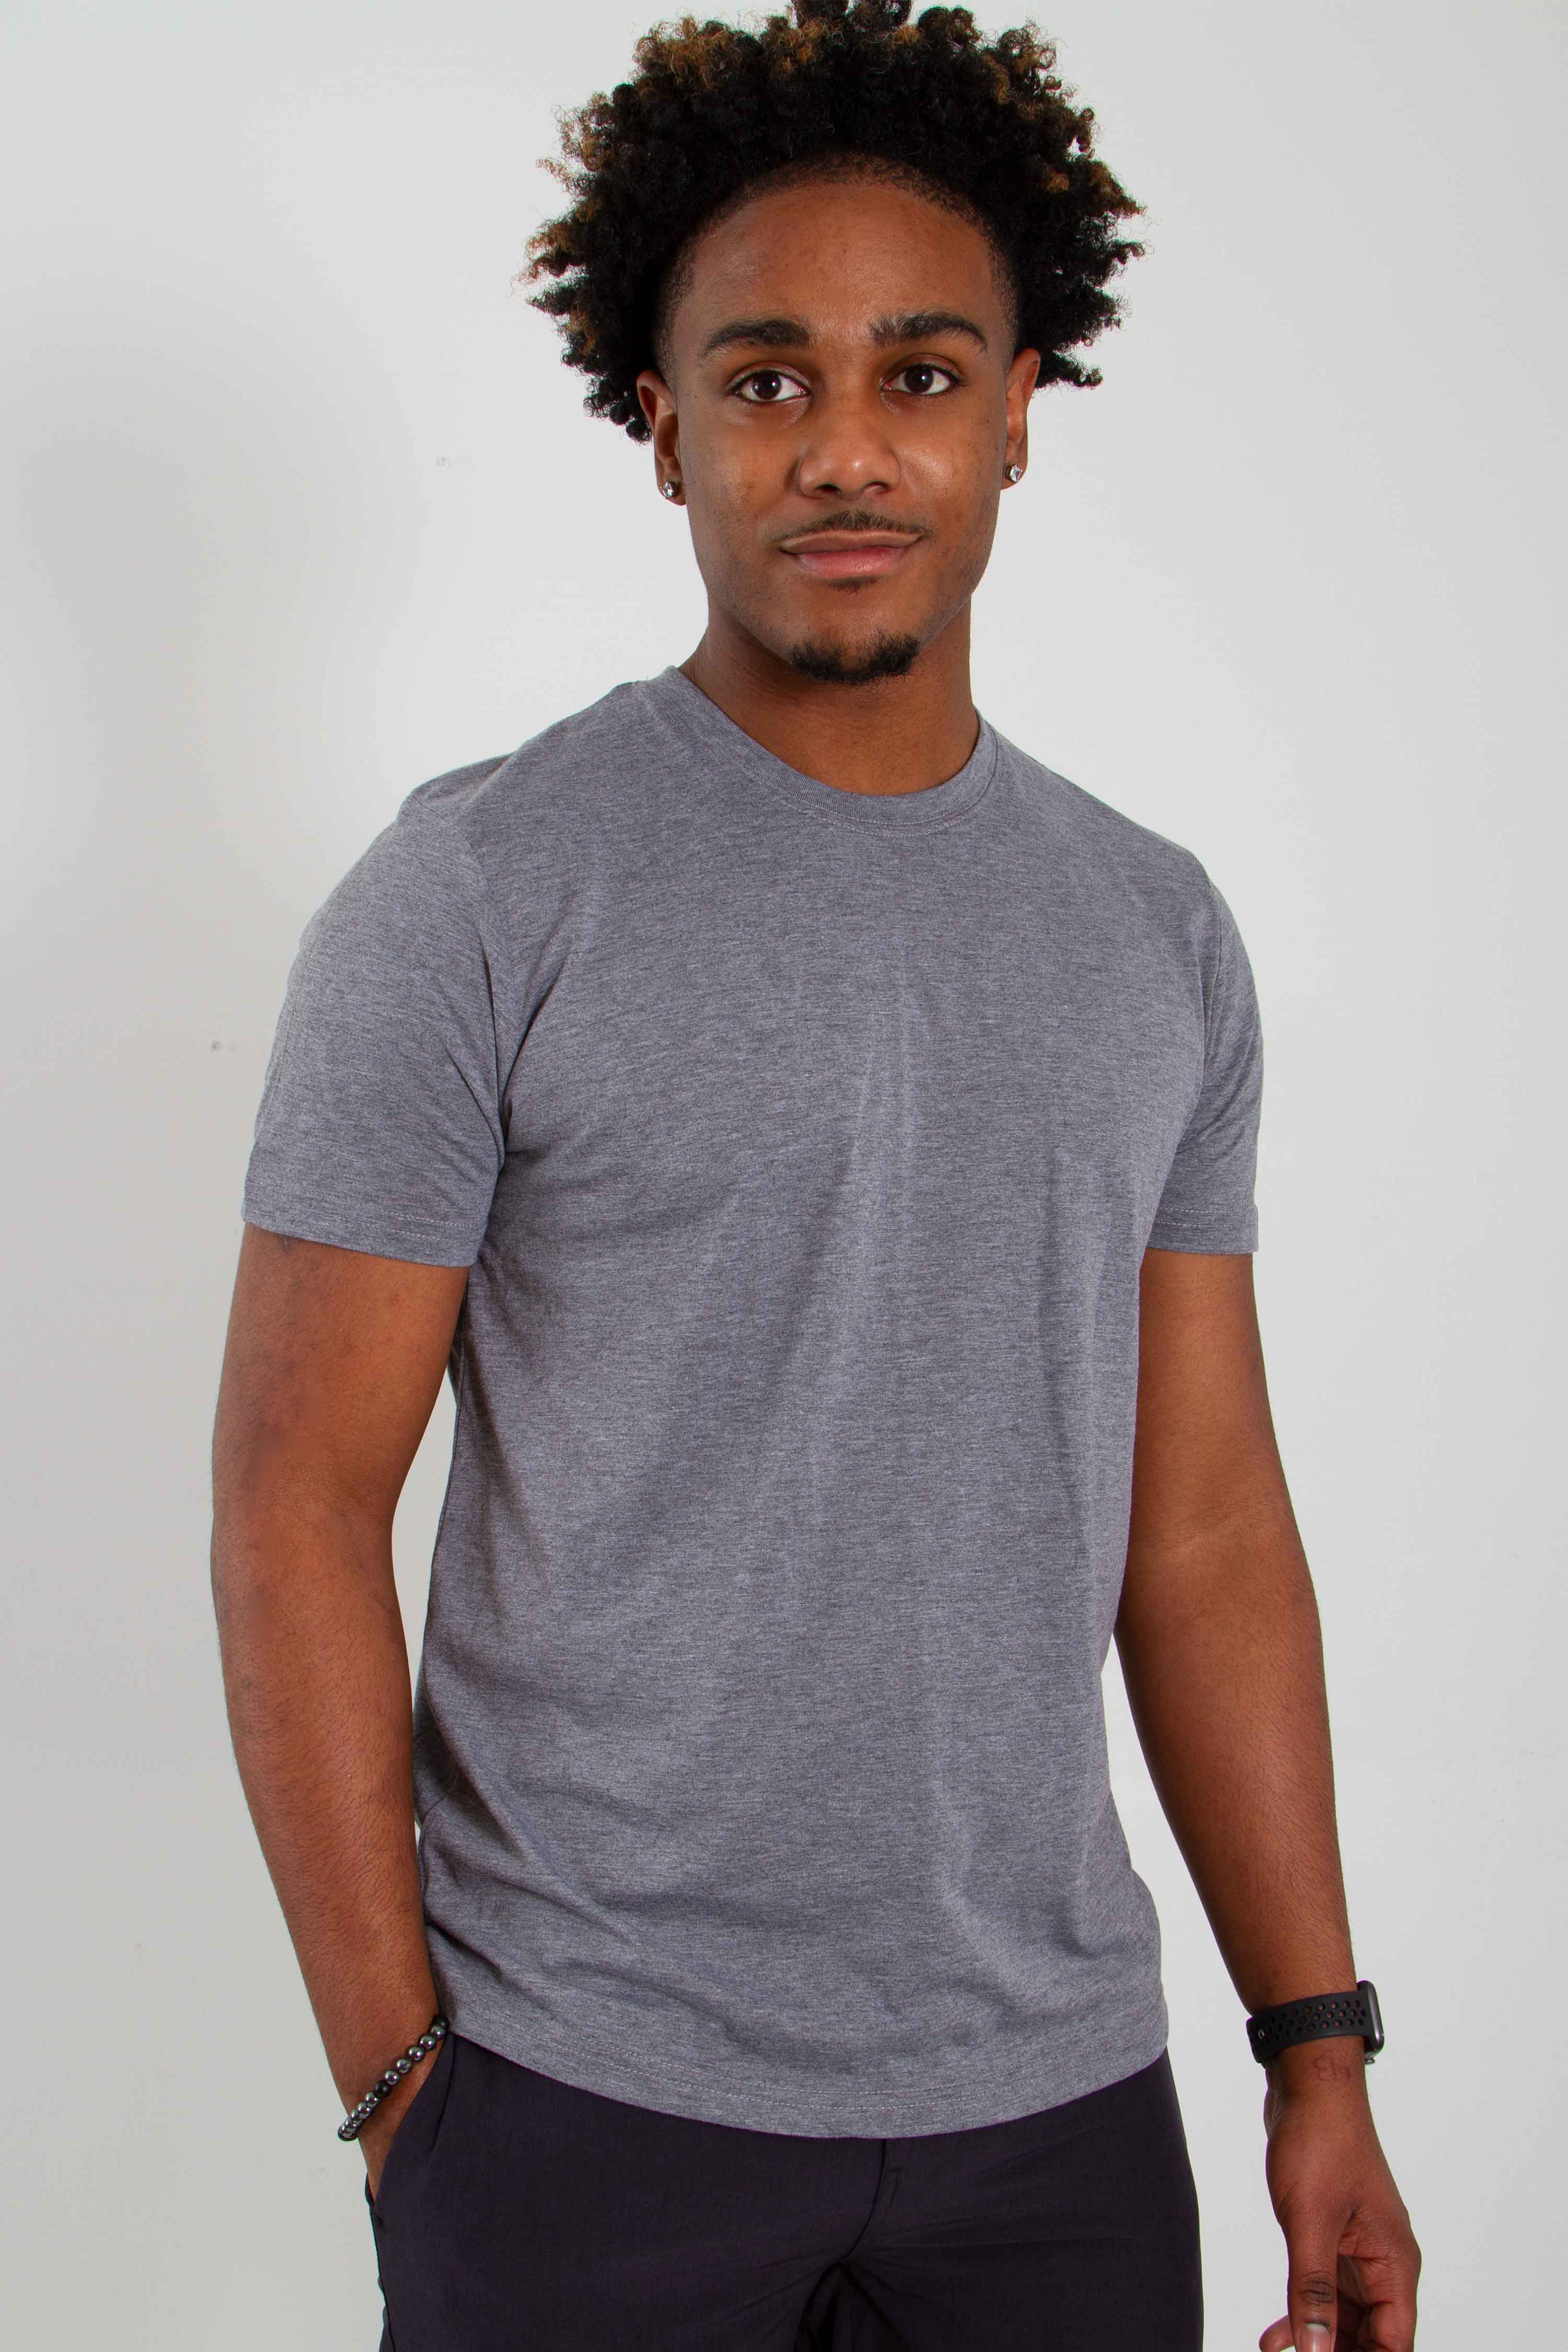 Basic Crewneck T-Shirt for Men in Speckled White